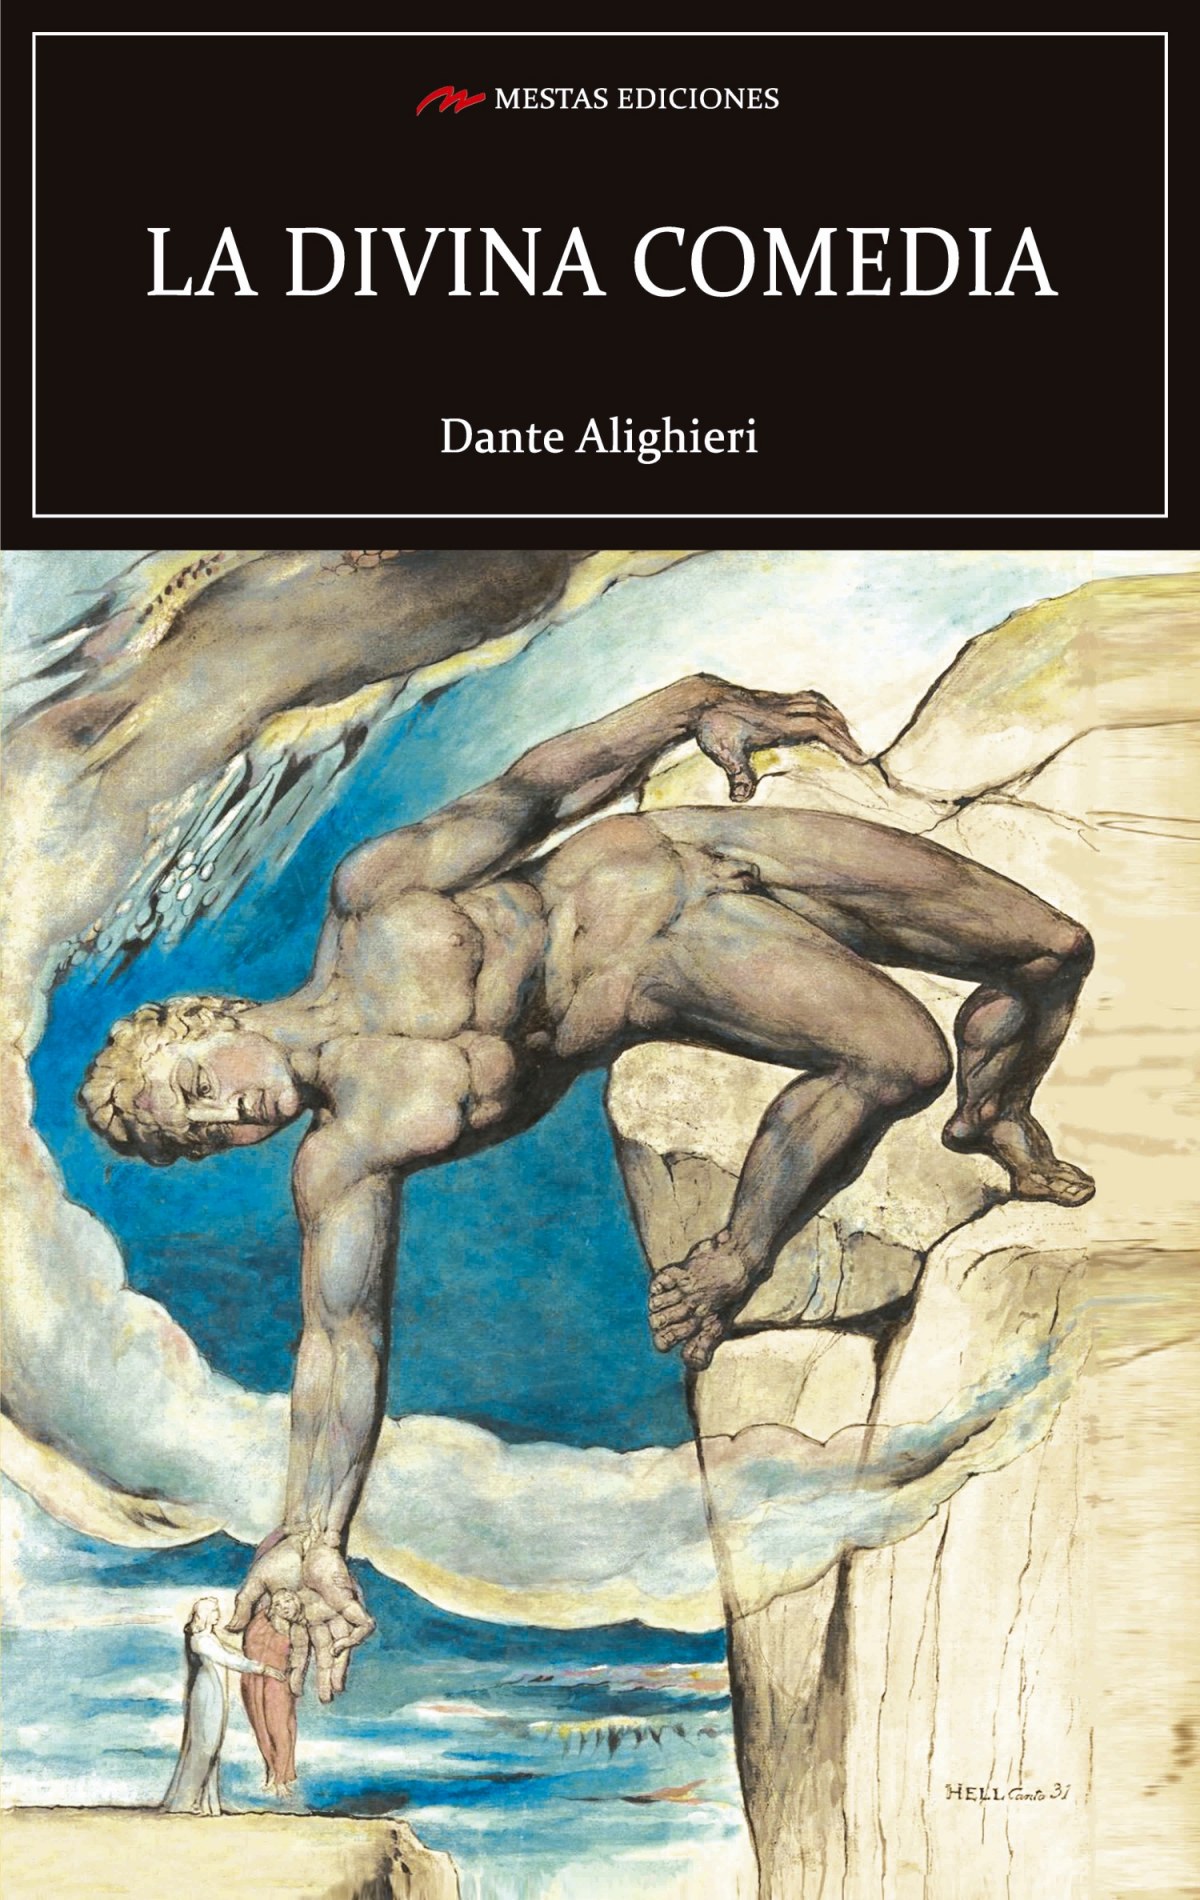 La divina comedia - Alighieri, Dante